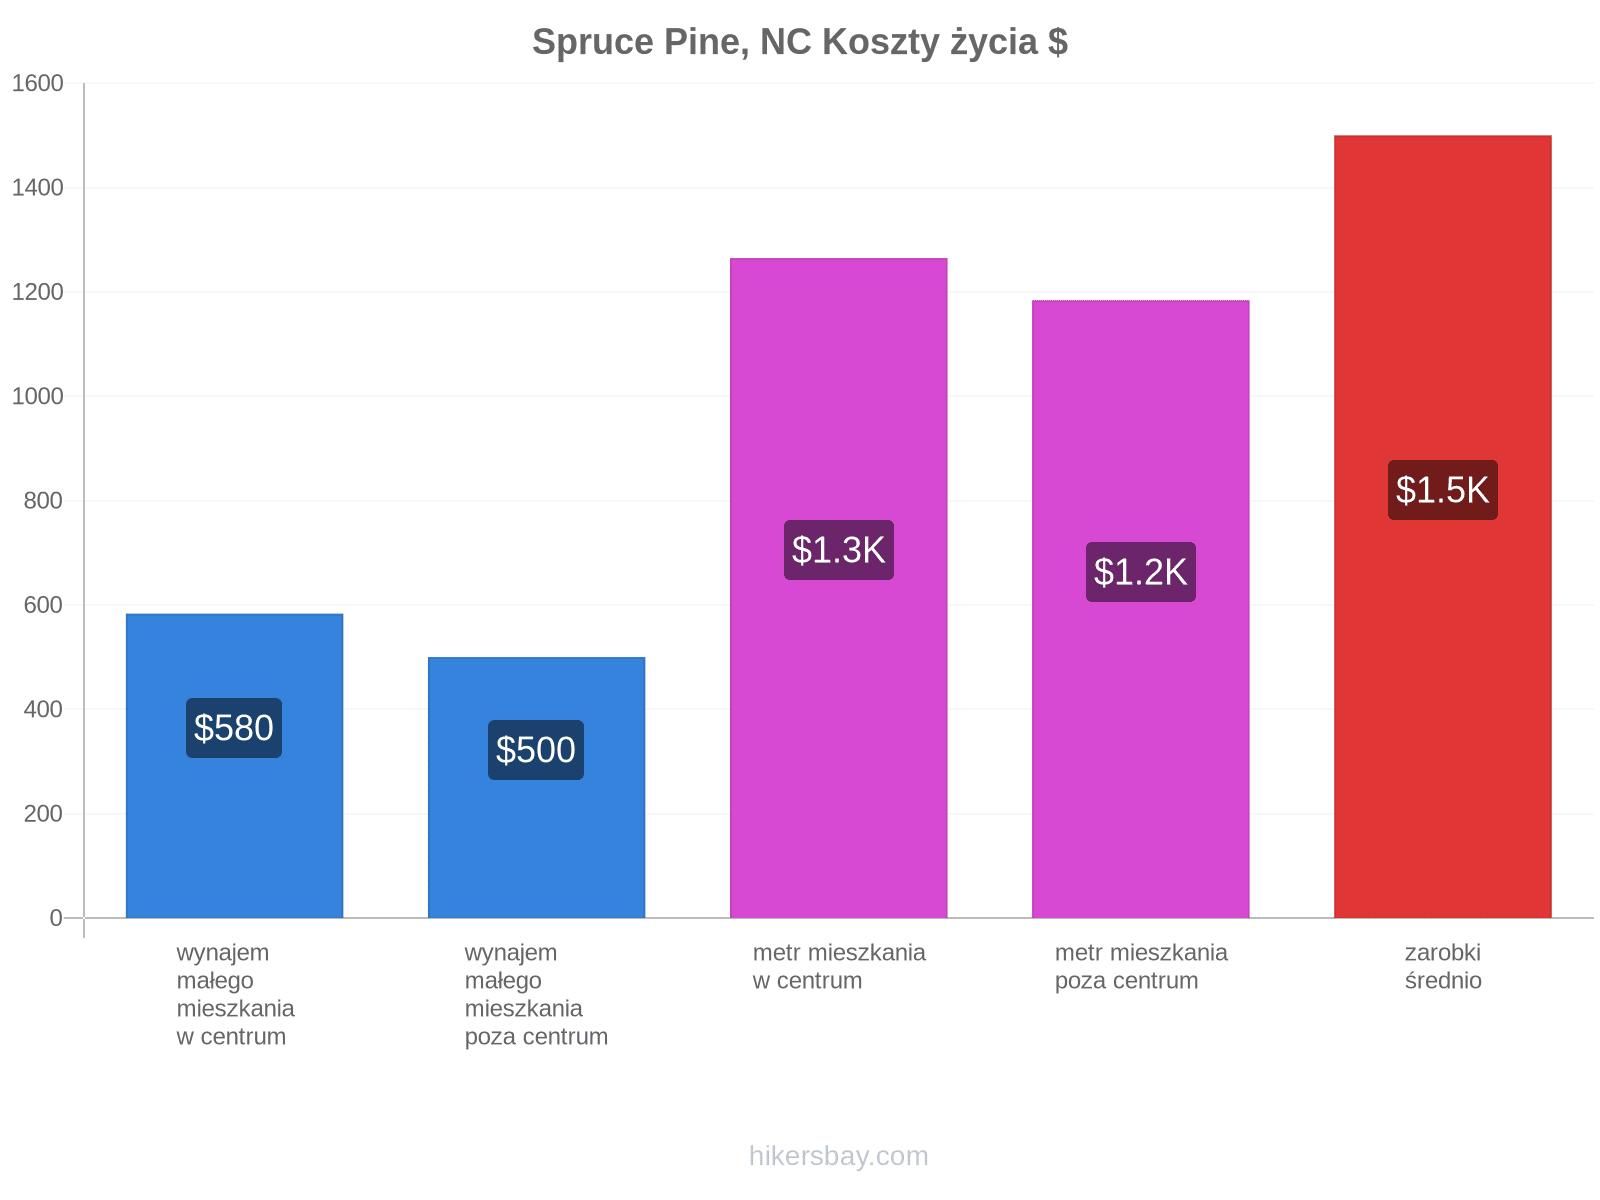 Spruce Pine, NC koszty życia hikersbay.com